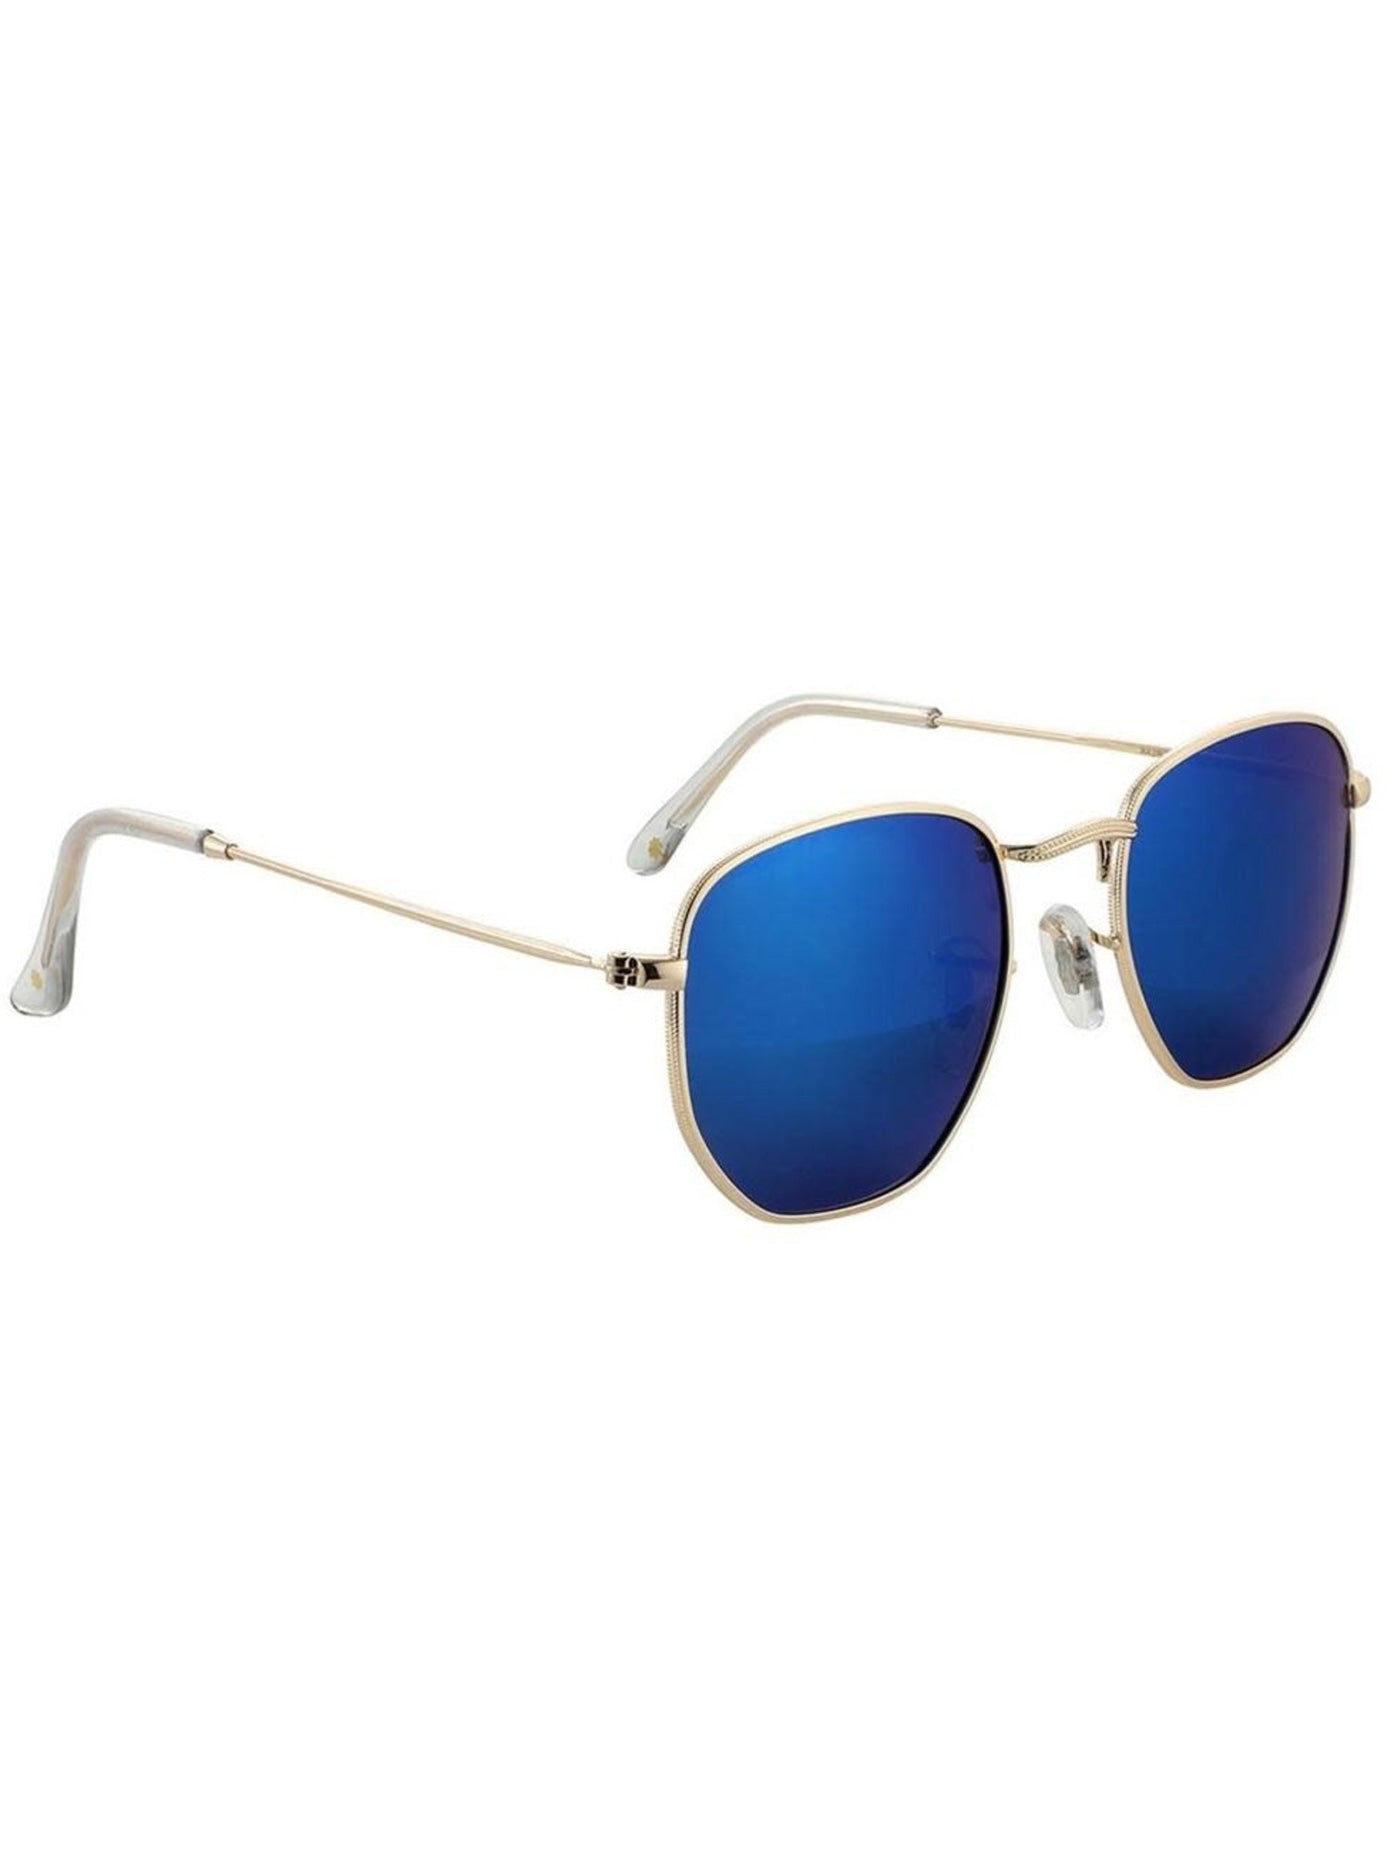 Glassy Turner Polarized Sunglasses